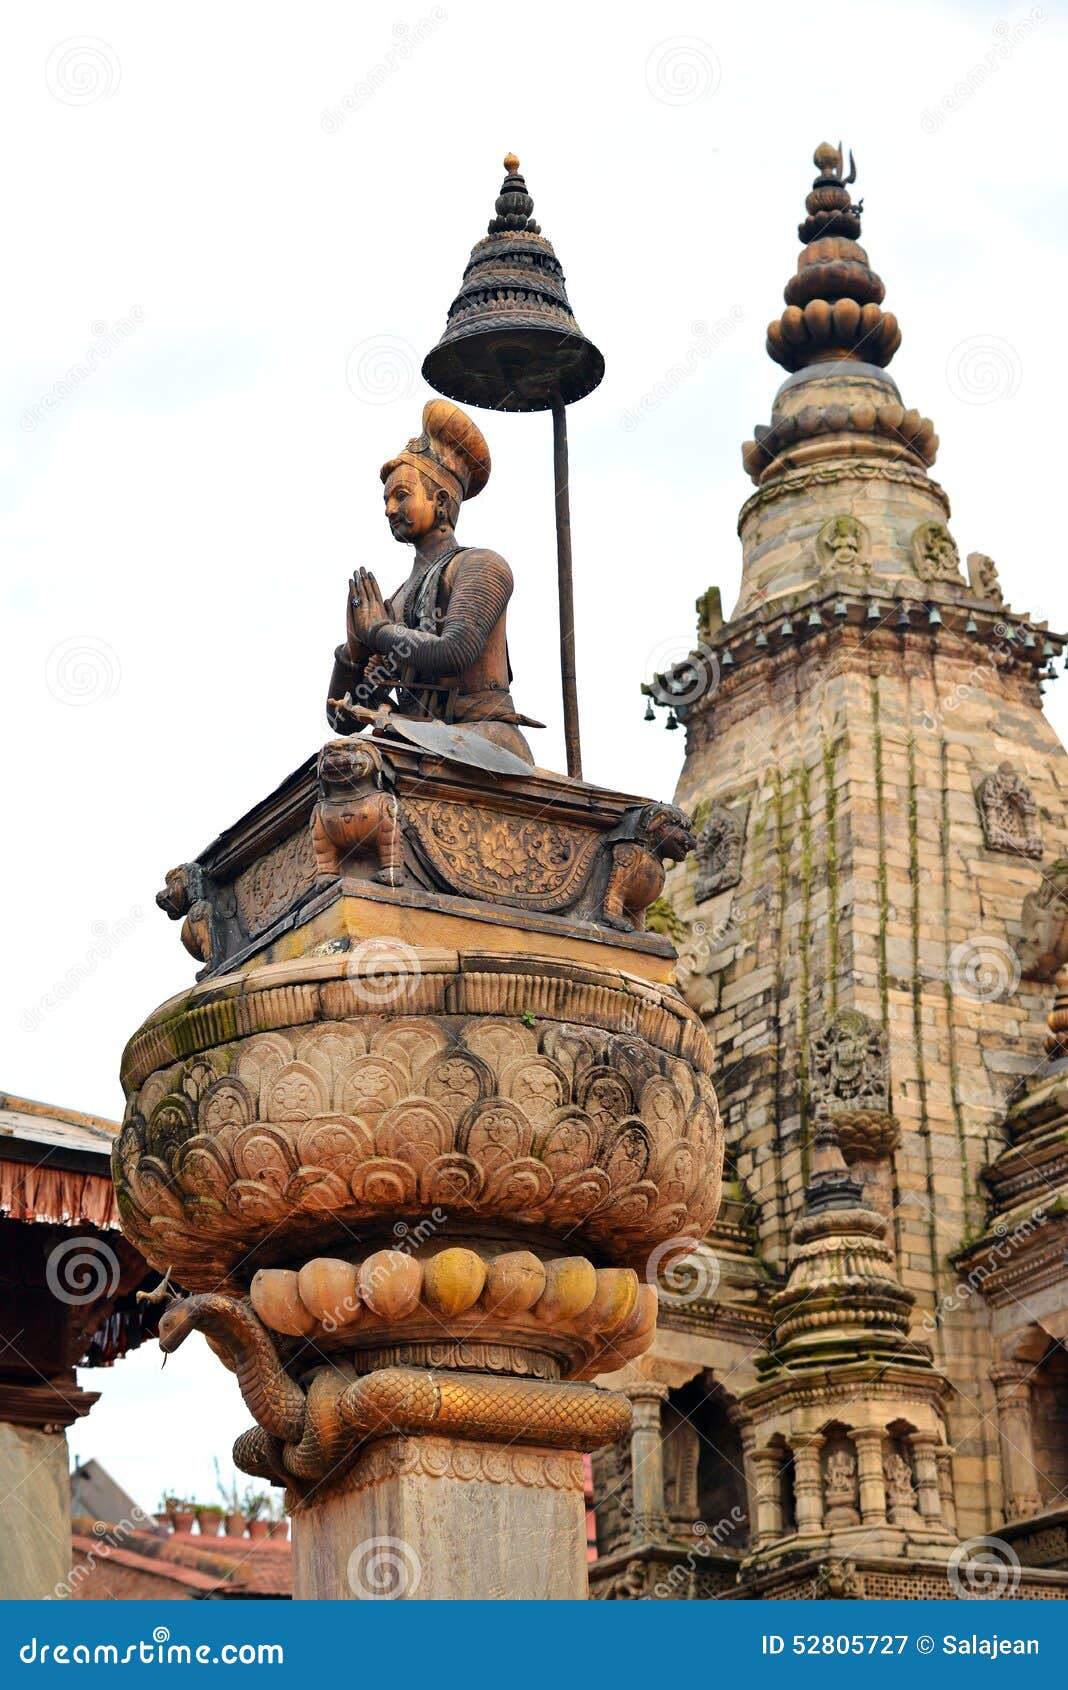 statue of the newari king ranjit malla. bhaktapur, nepal